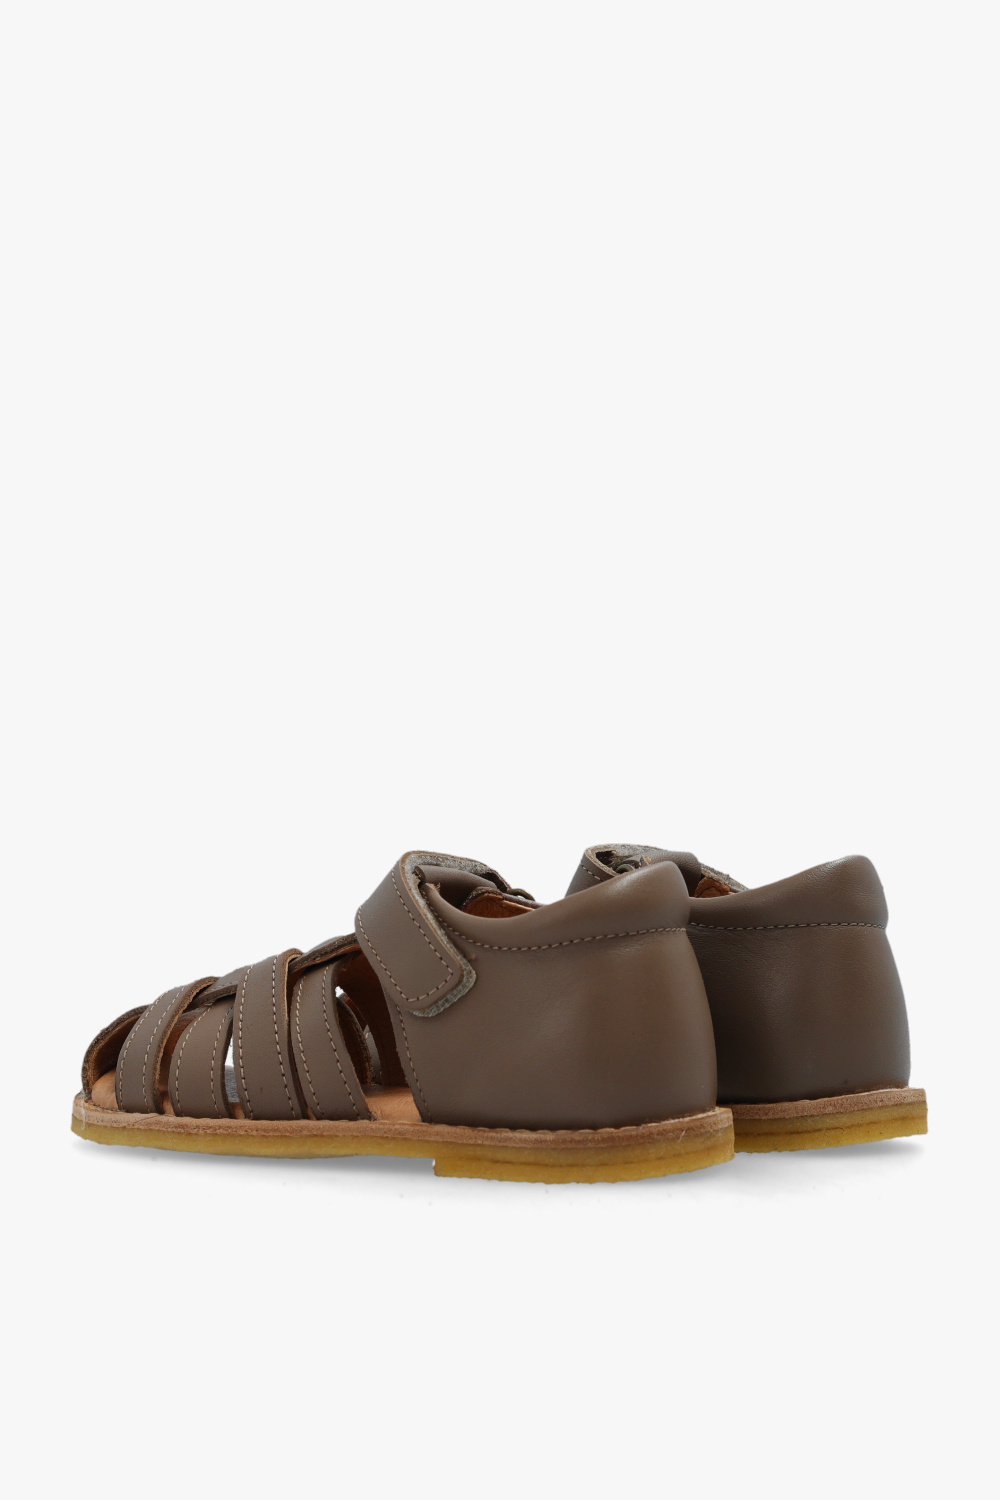 Konges Sløjd ‘Lapinou’ leather sandals